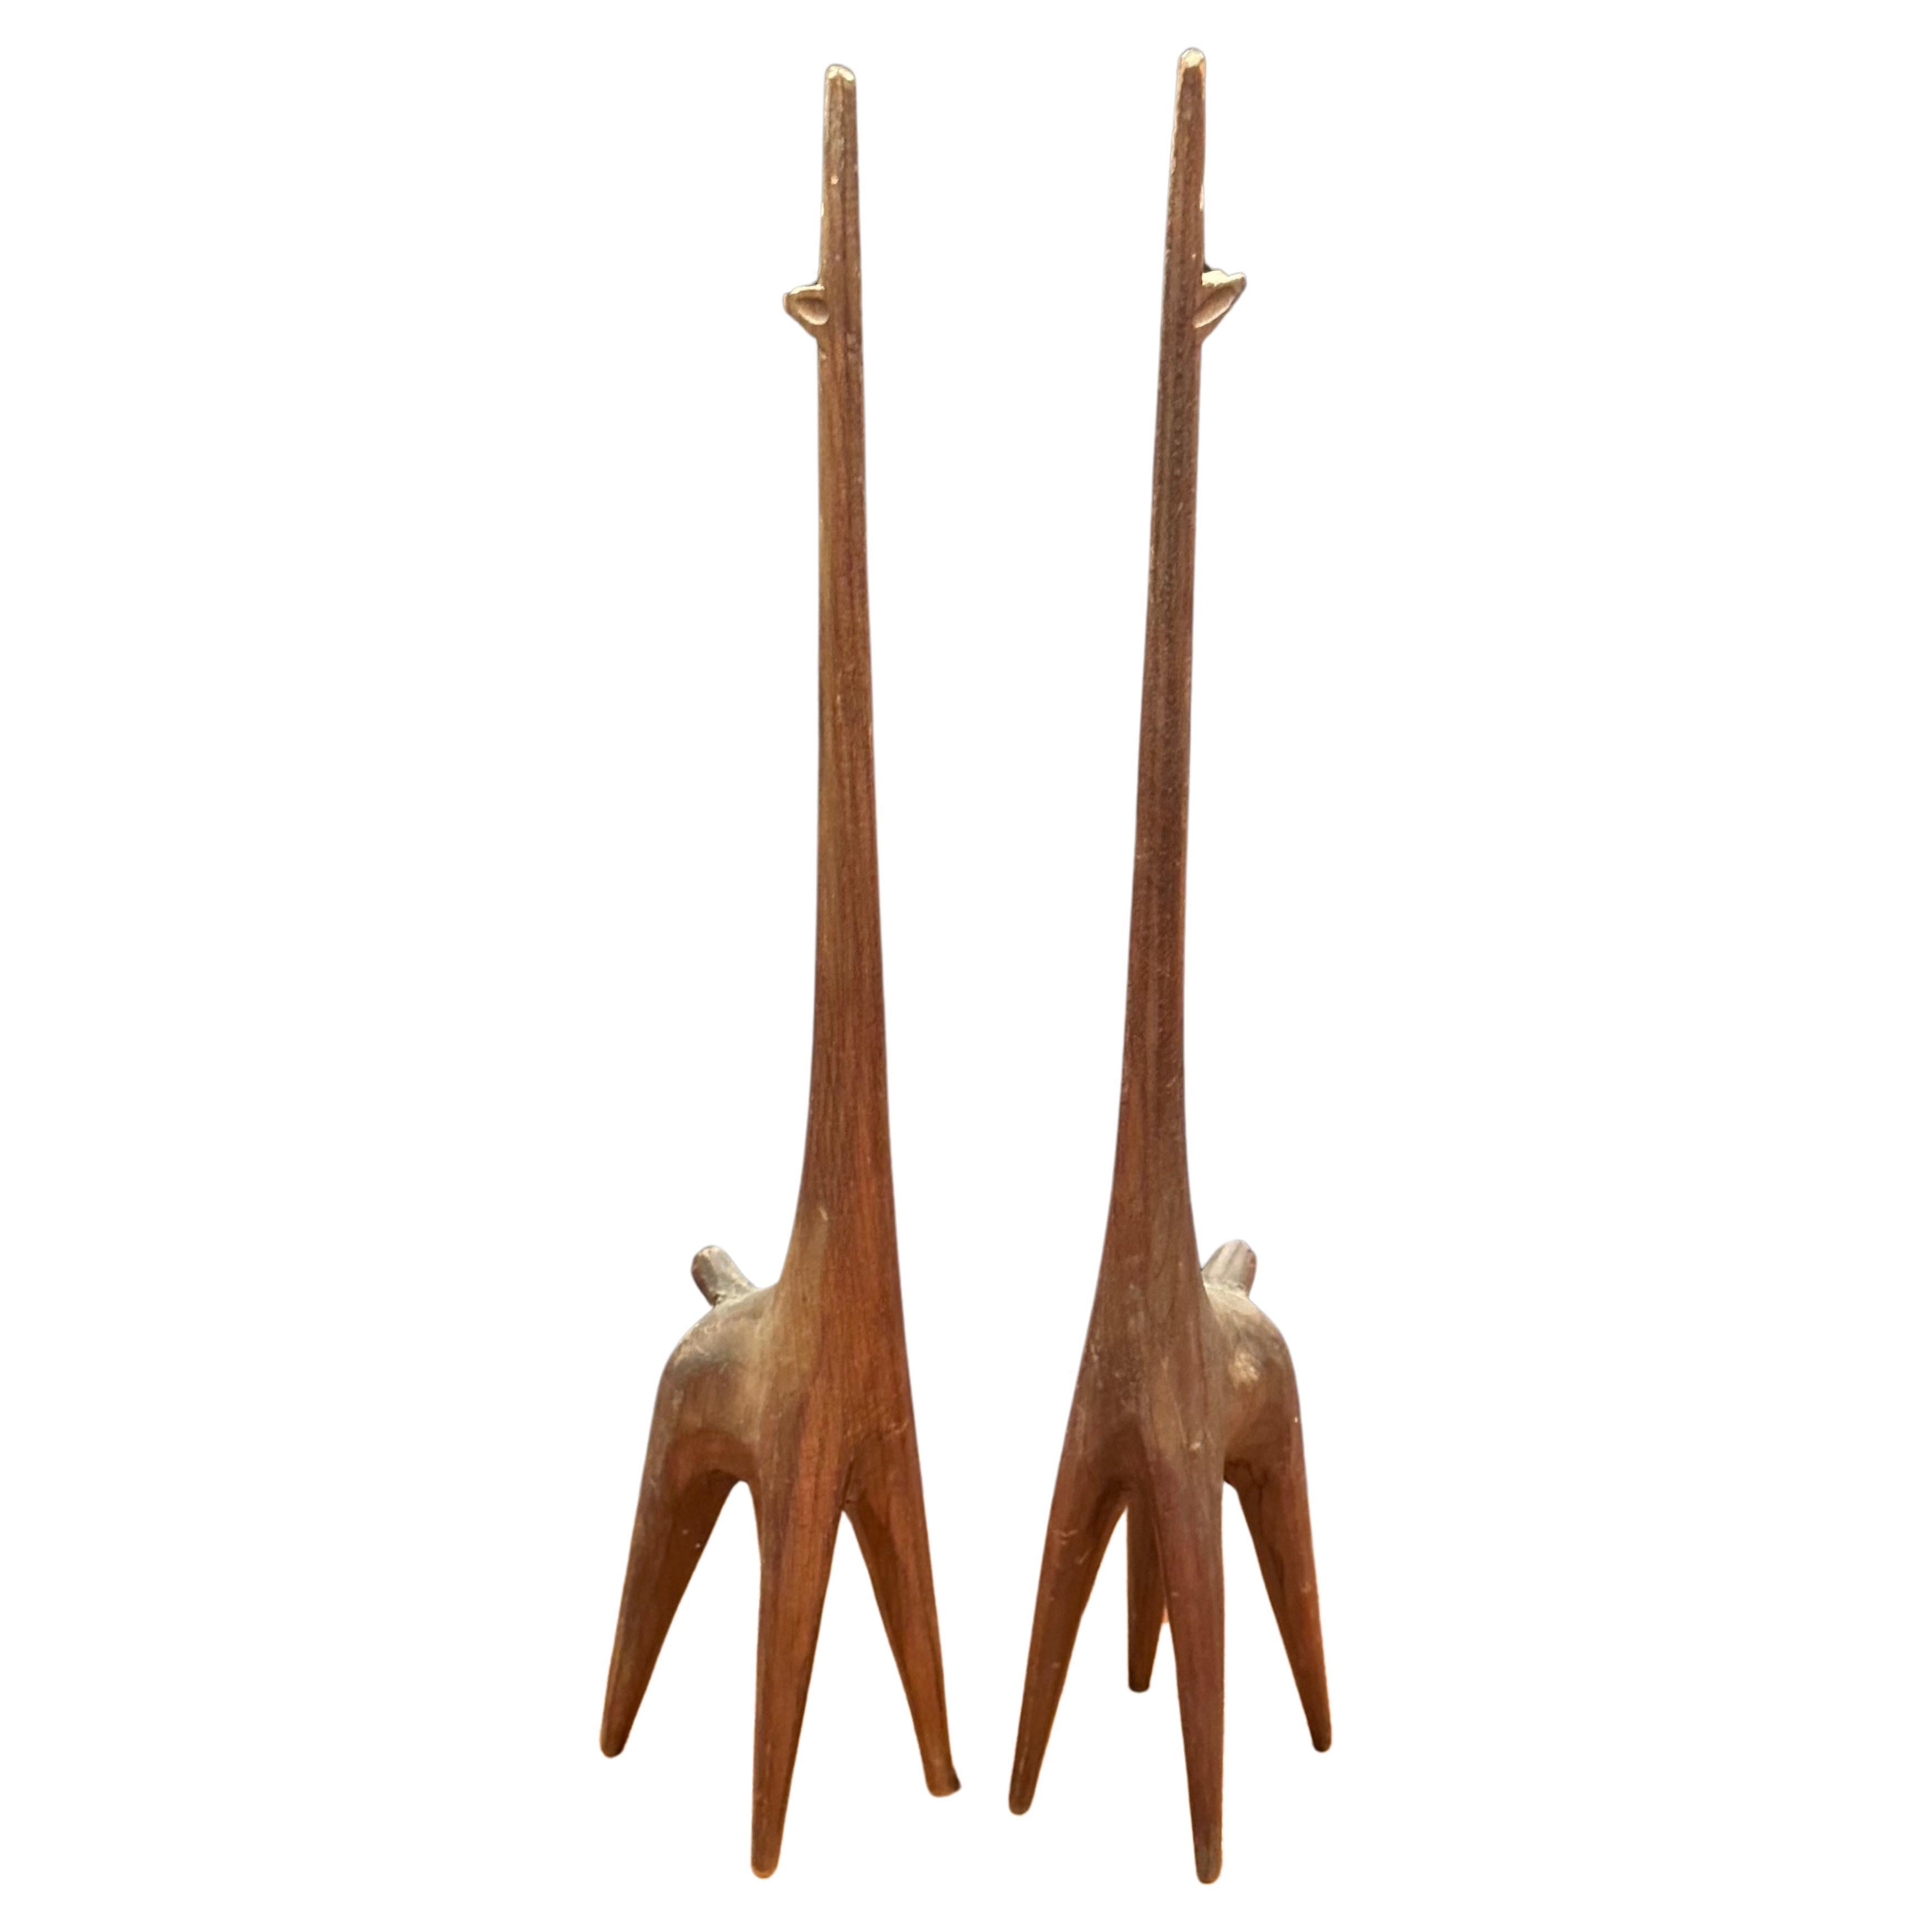 Pair of Modernist Carved Wood Giraffe Sculptures 